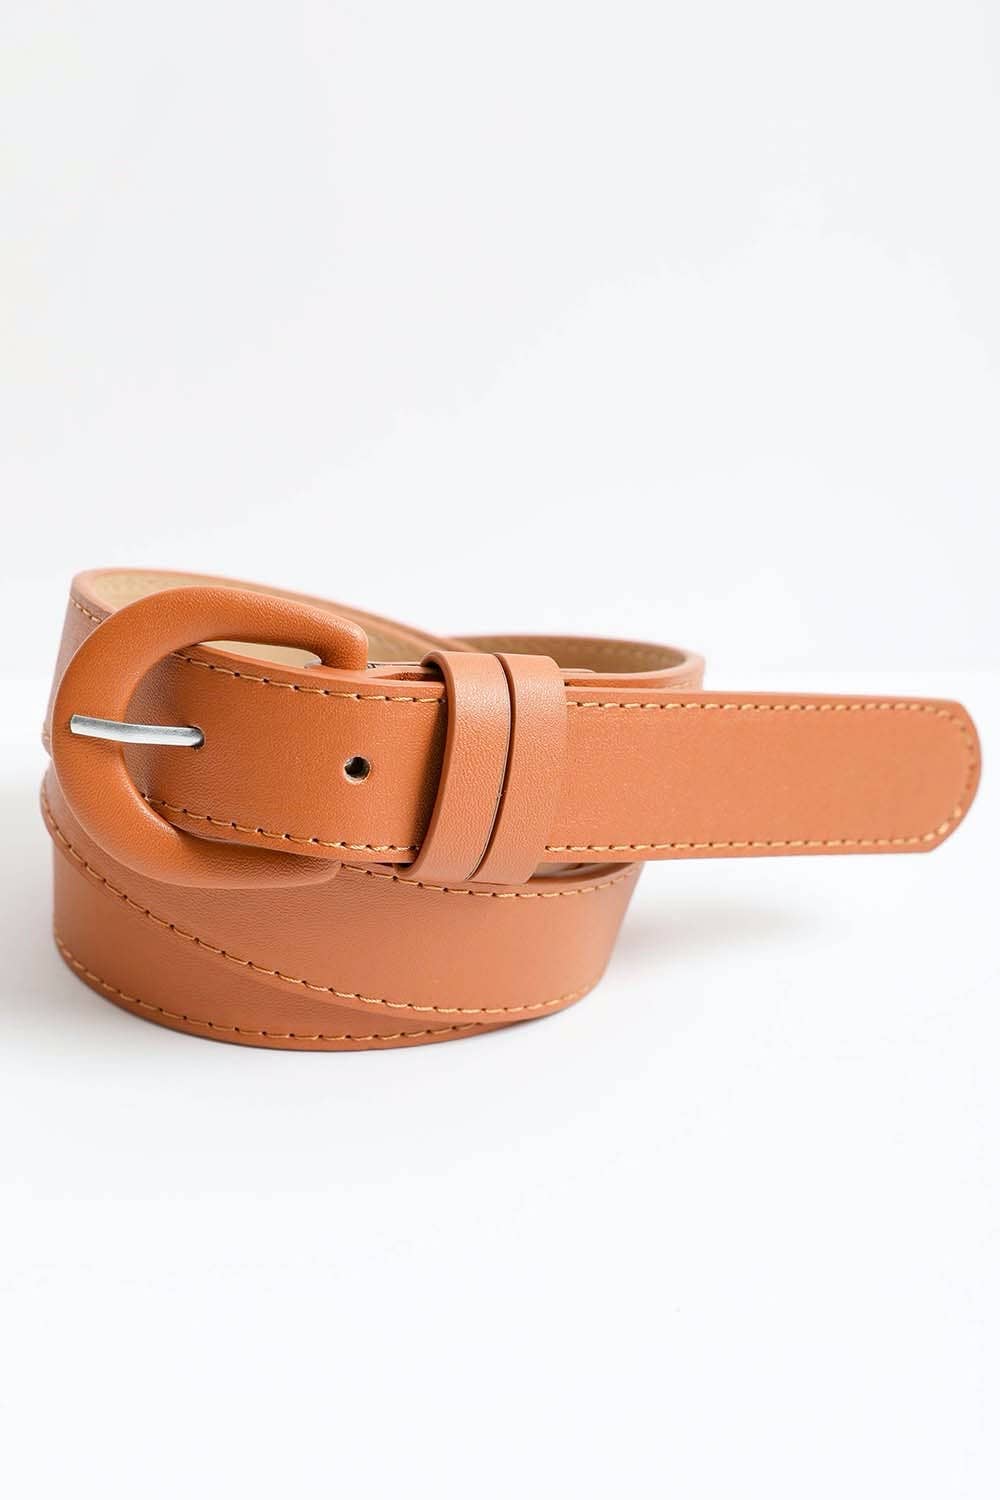 Vegan Leather Belt By A Thread Boutique BELTS-332 